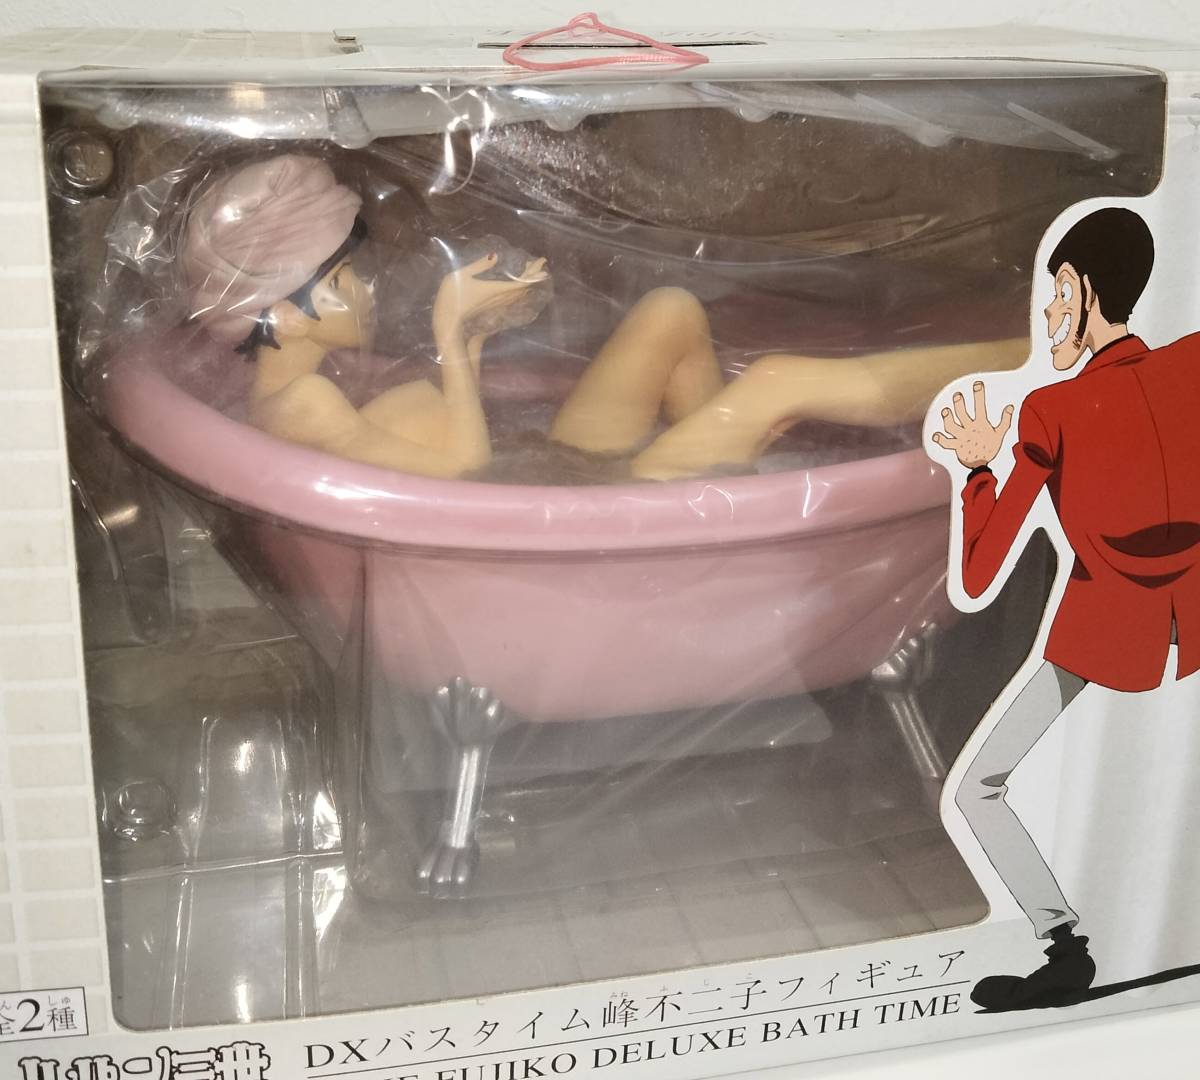  Lupin III DXba нагрудник m Mine Fujiko фигурка ( розовый )